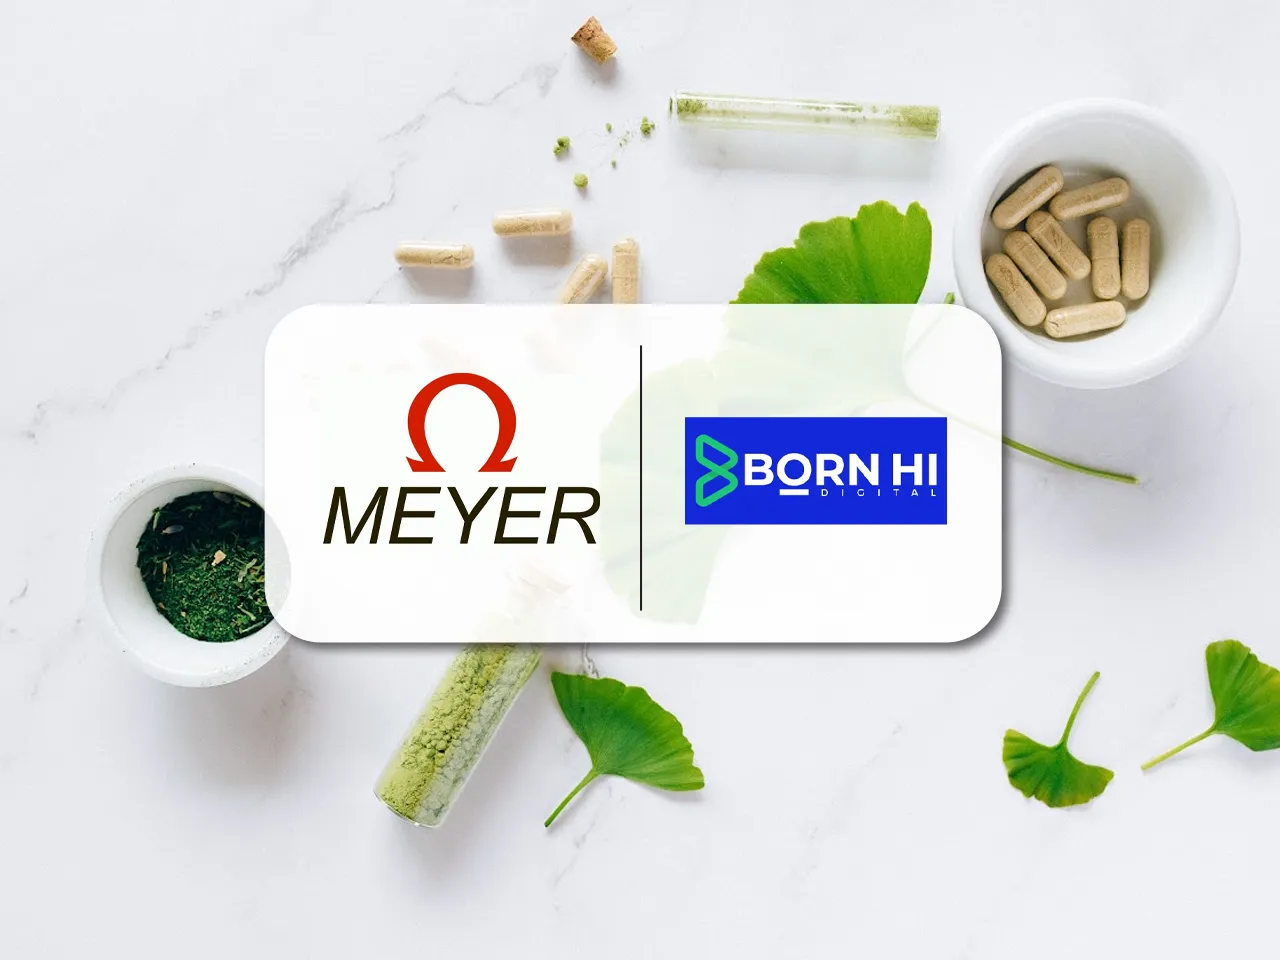 BORN HI wins the digital mandate for Meyer Organics